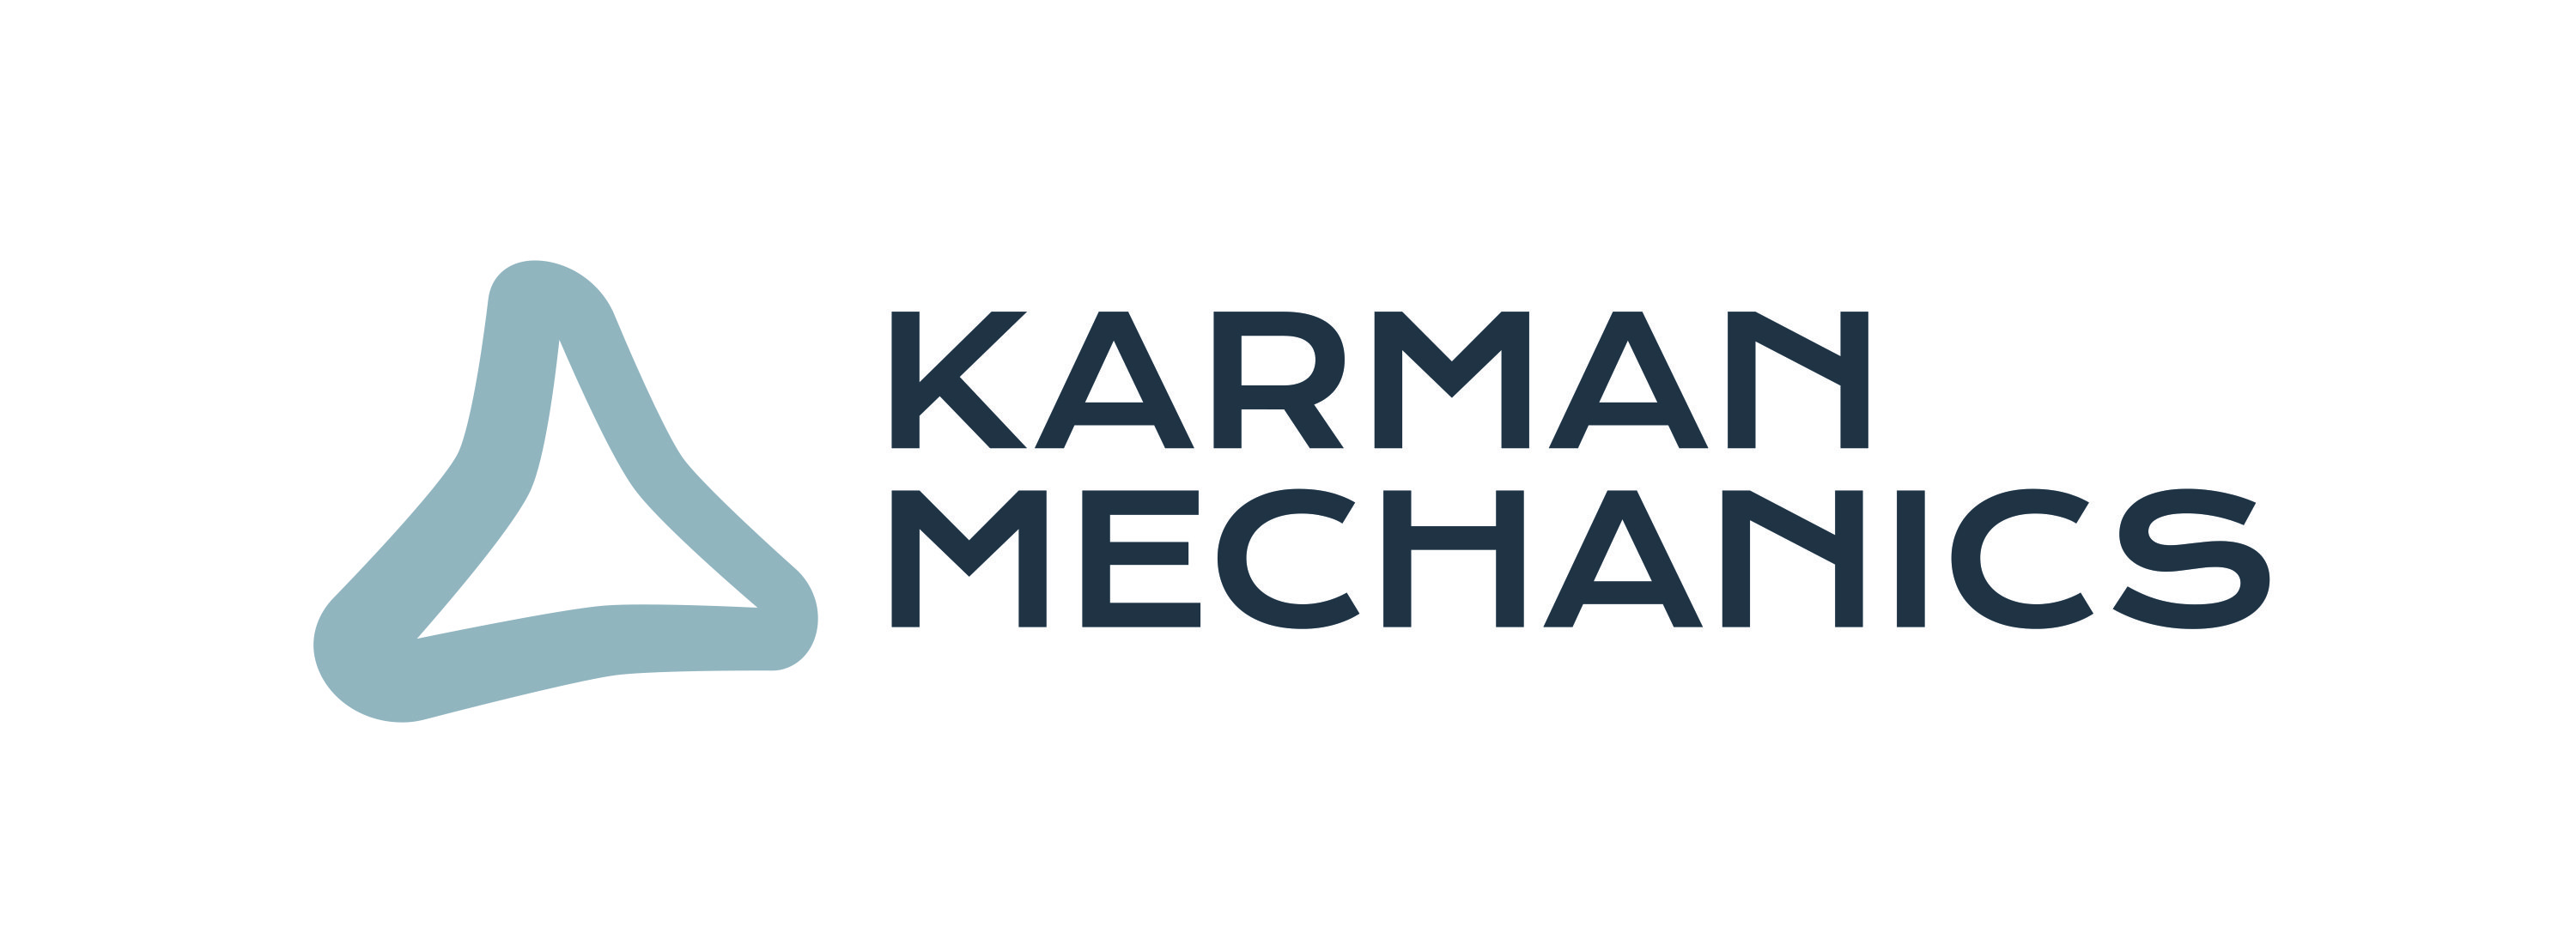 Karman Mechanics